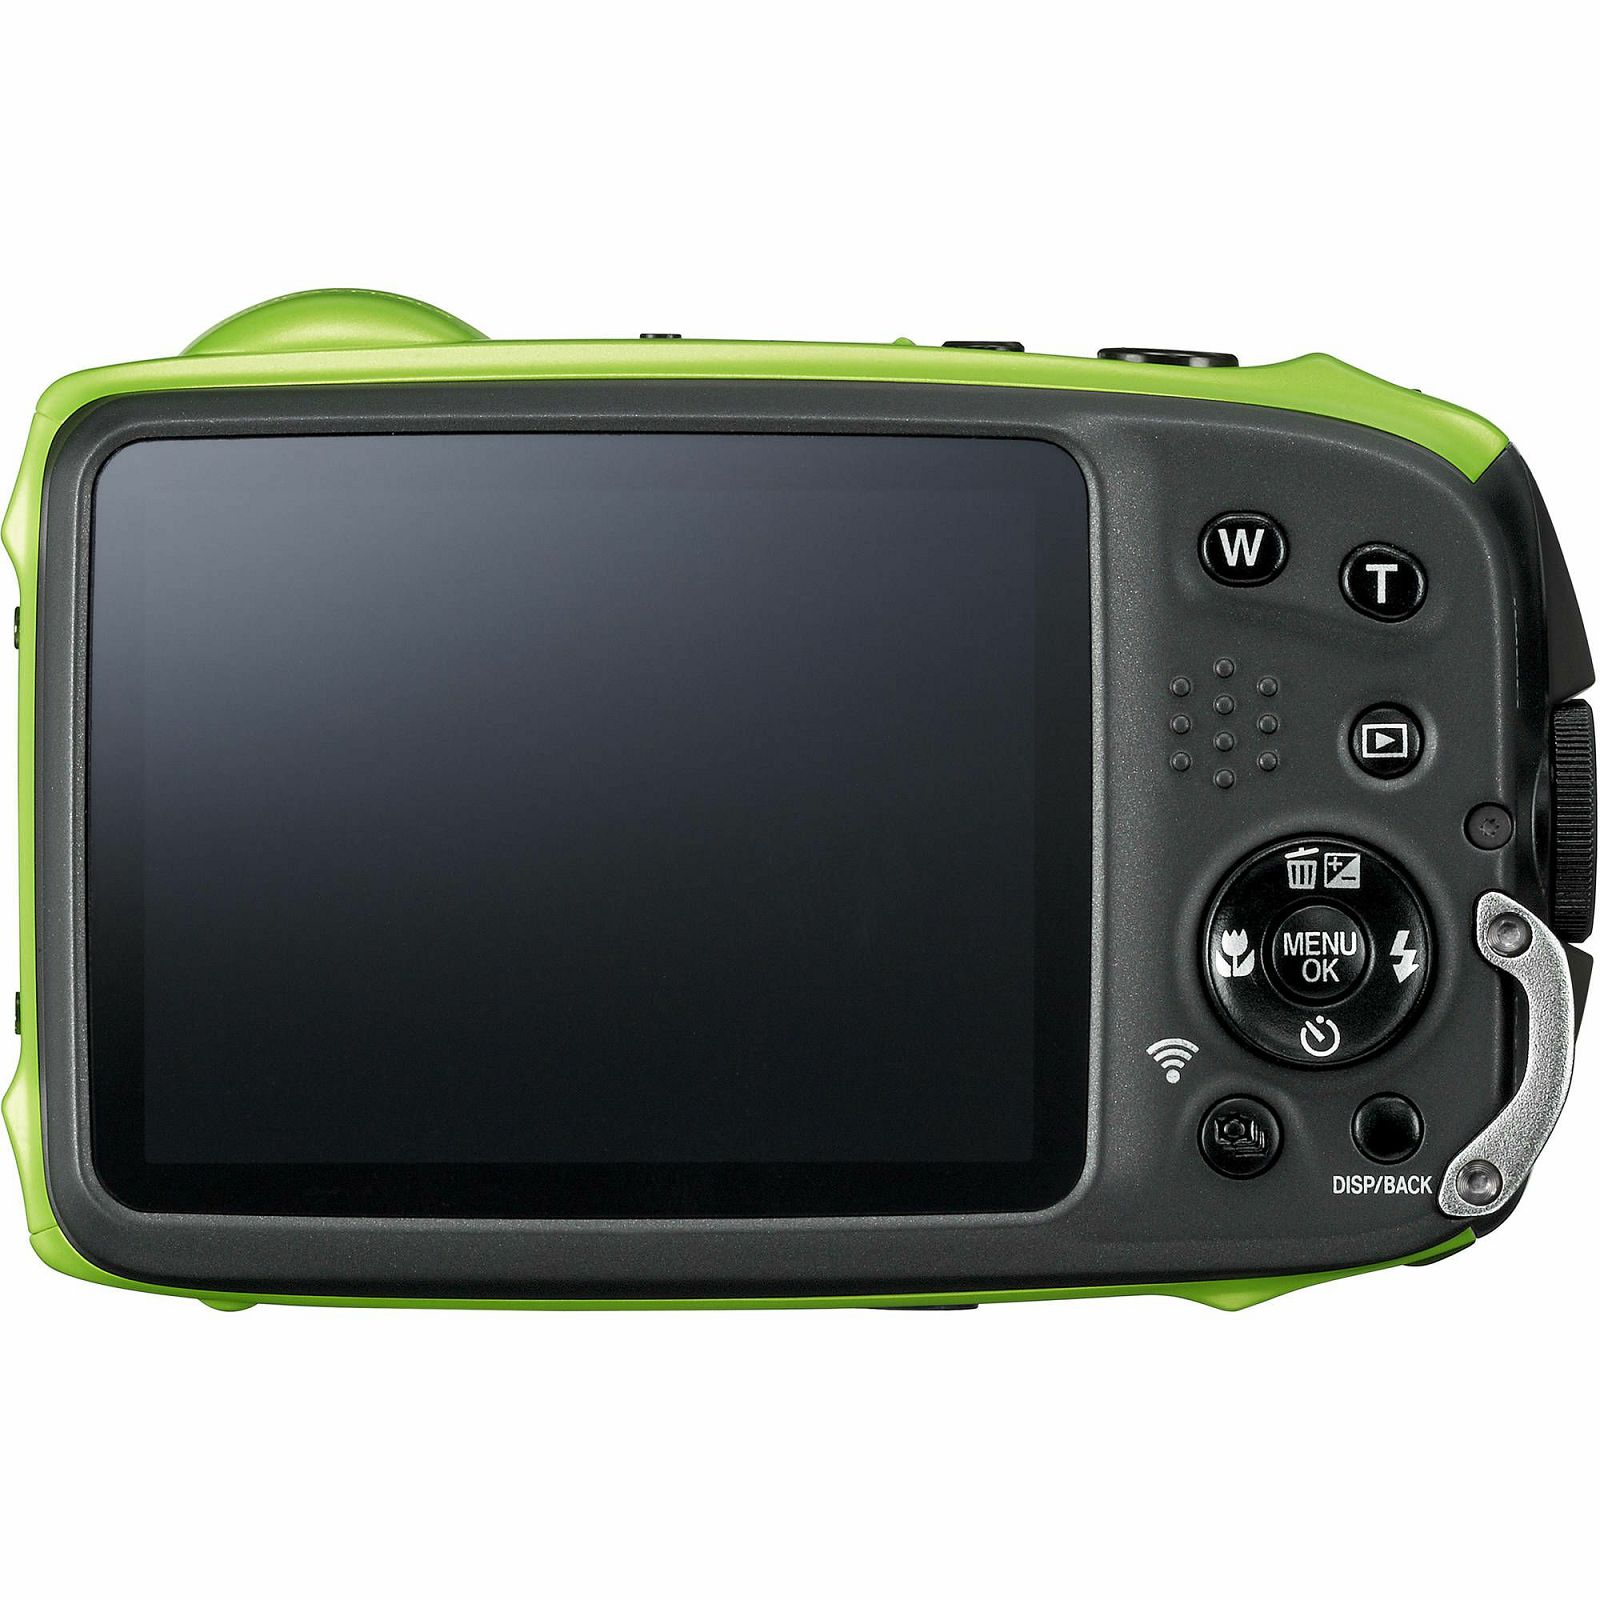 Fuji FinePix XP90 Lime Black Fujifilm XP-90 Crni zeleni vodootporni podvodni digitalni fotoaparat WiFi remote 5x zoom 16.4Mpx 28mm BSI-CMOS sensor Digital camera